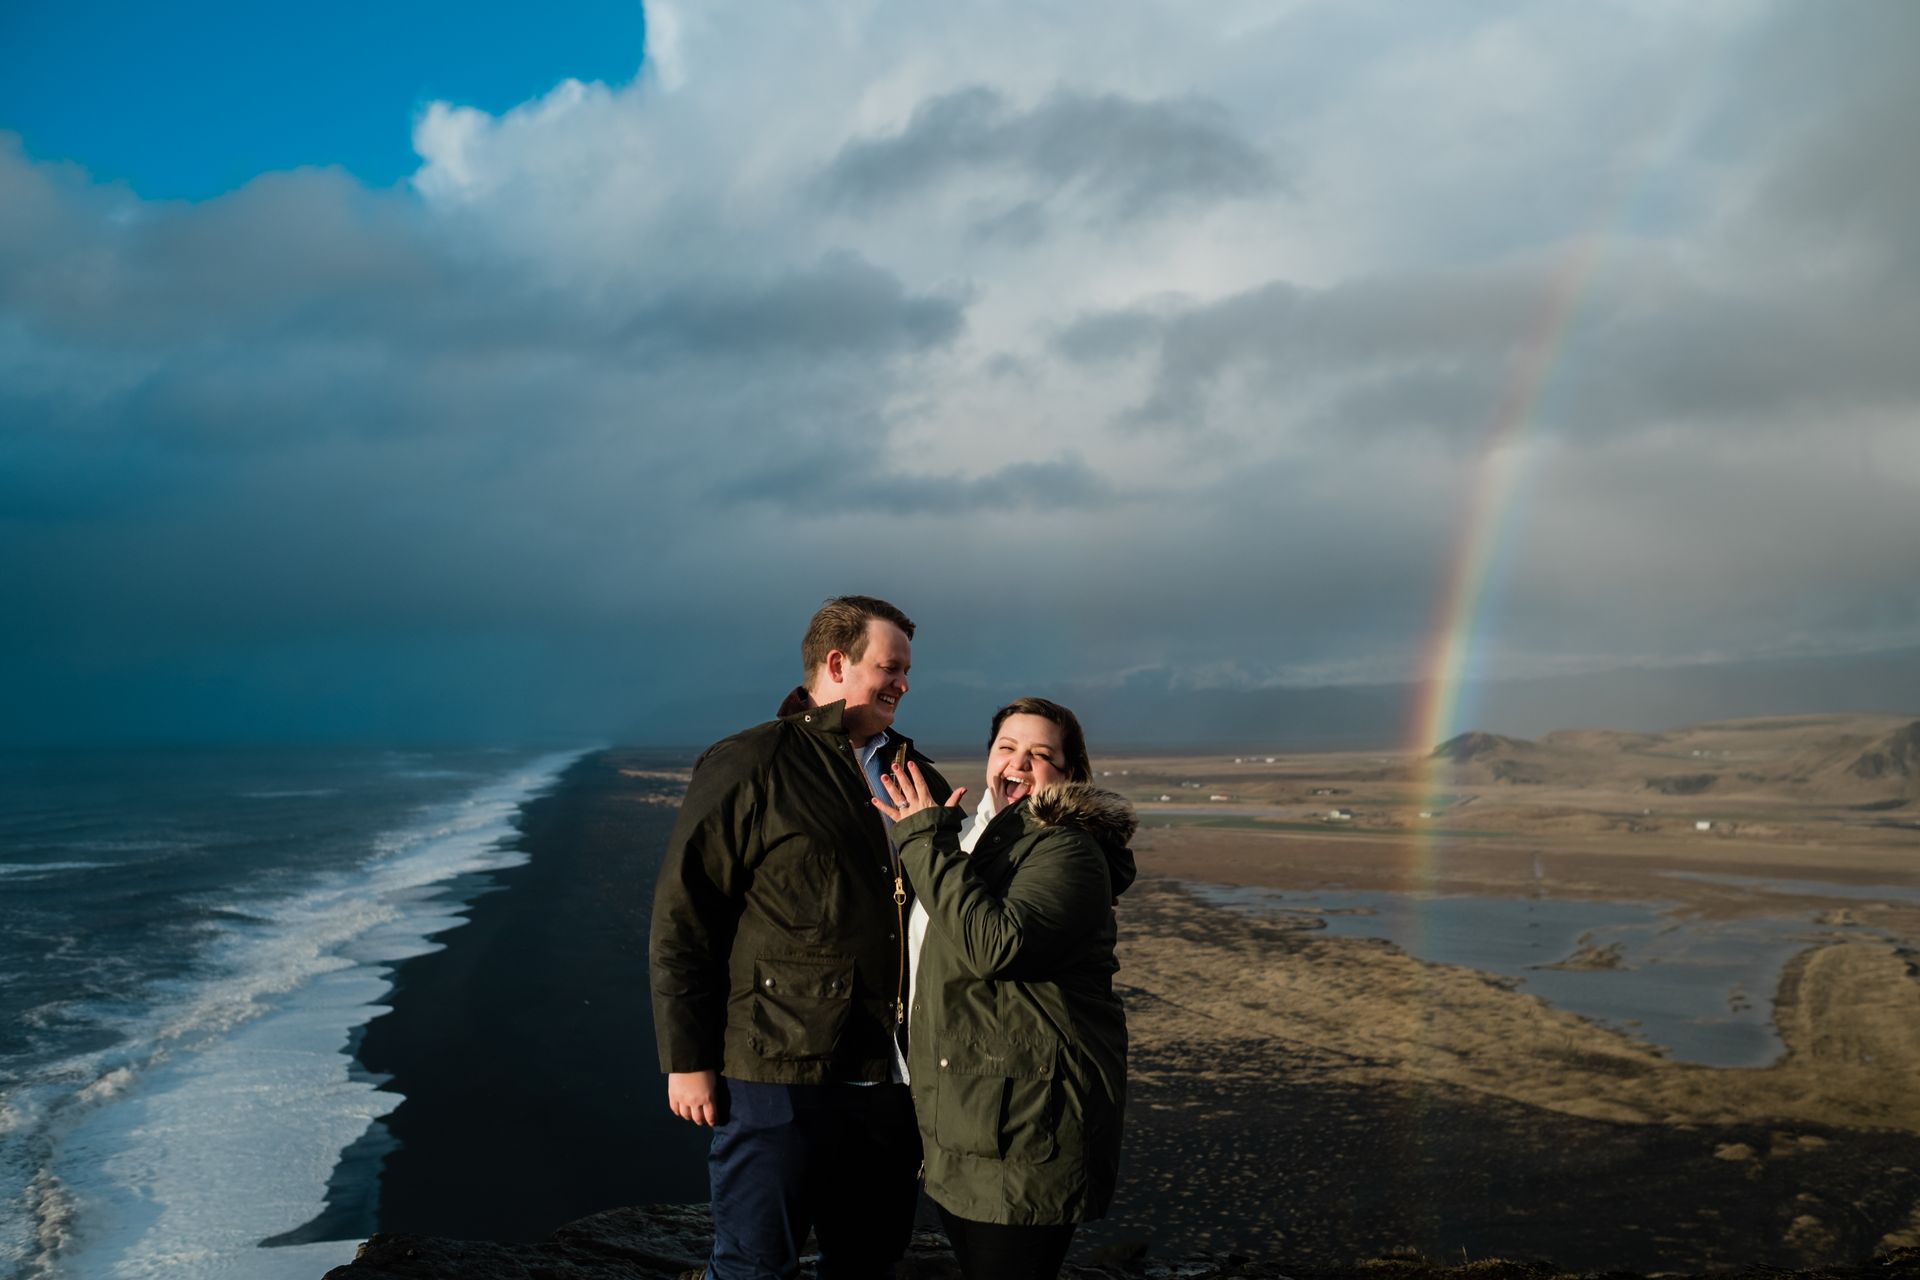 Iceland elopement photographer reviews